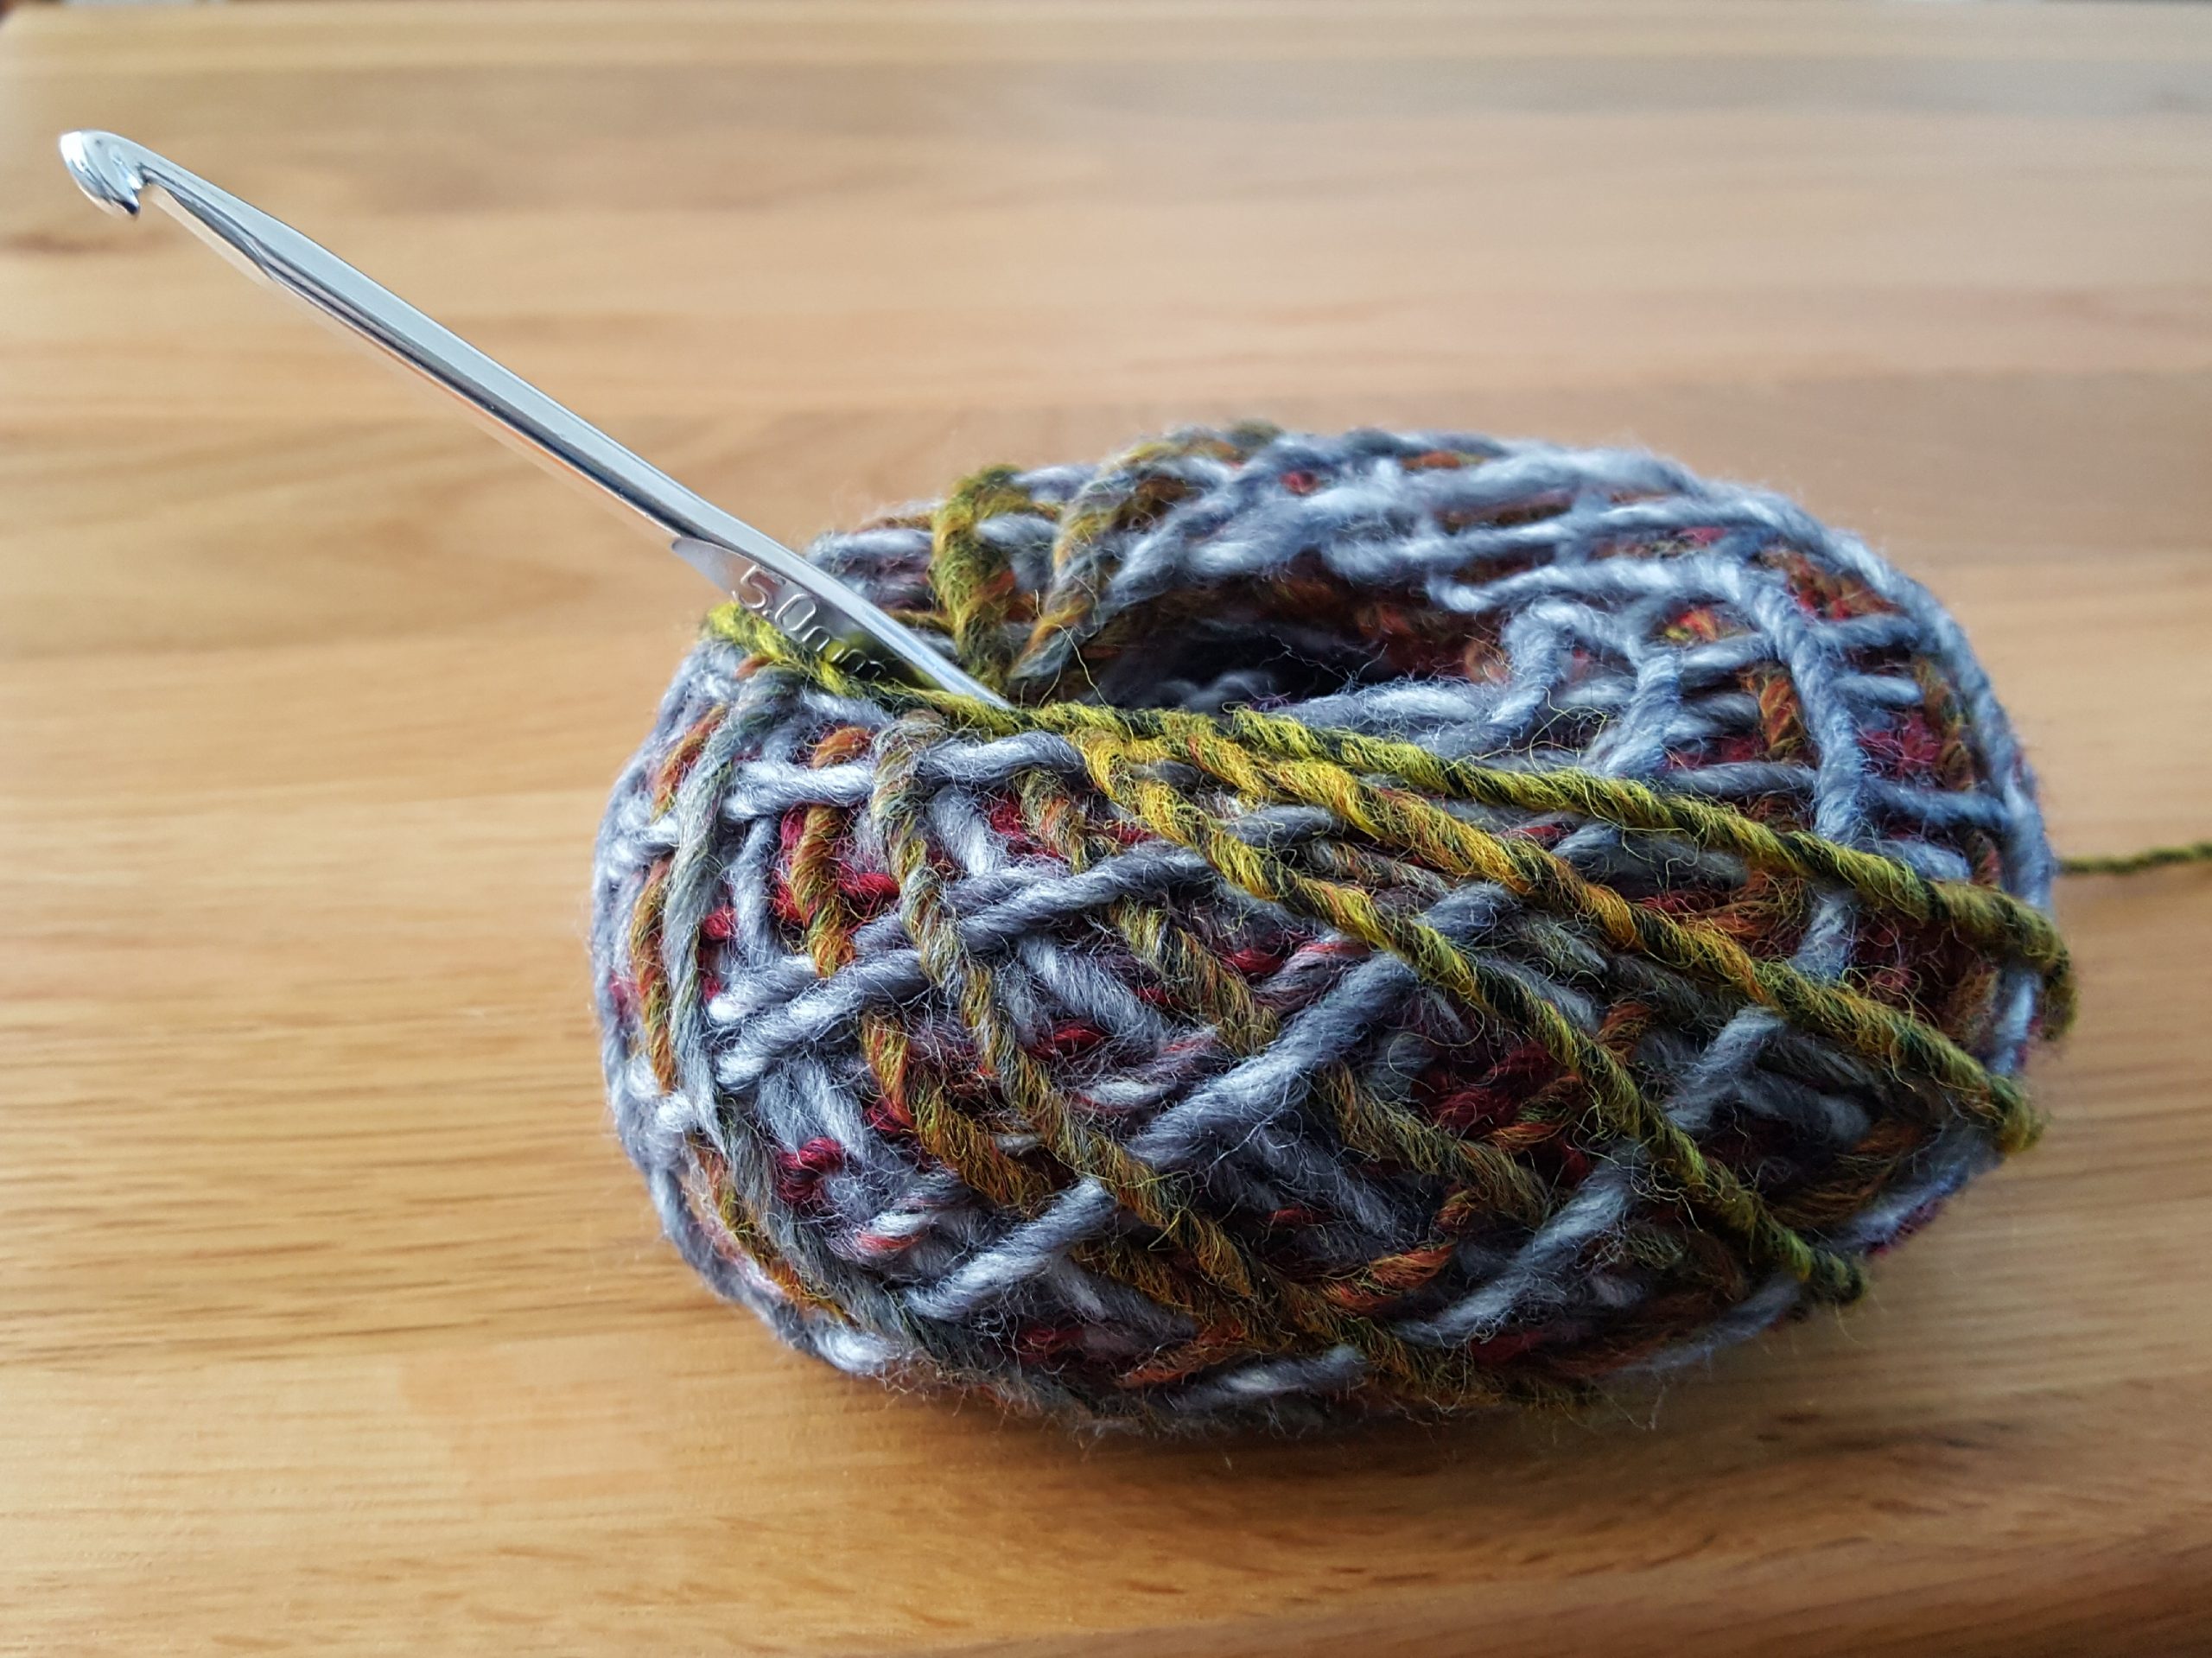 Crochet hook and ball of yarn